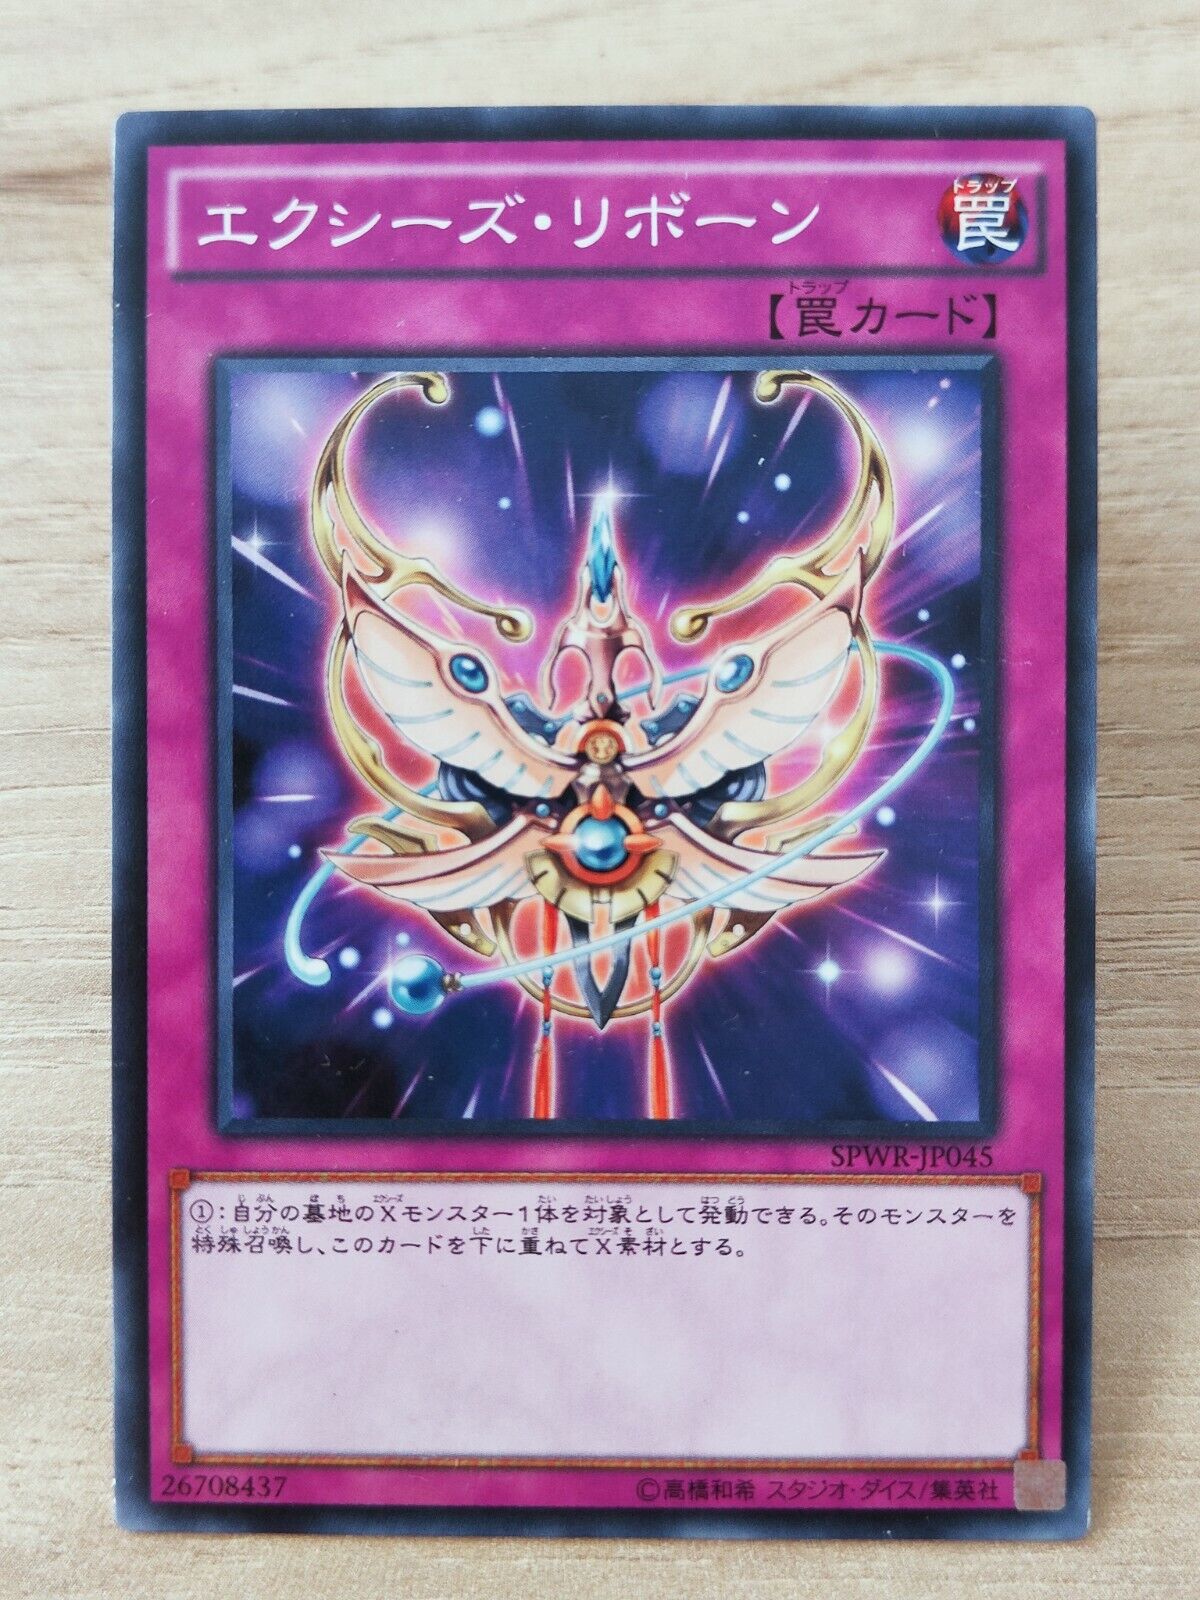 YU-GI-OH A79 Japanese Card Japan Konami Game - Xyz Reborn - SPWR-JP045